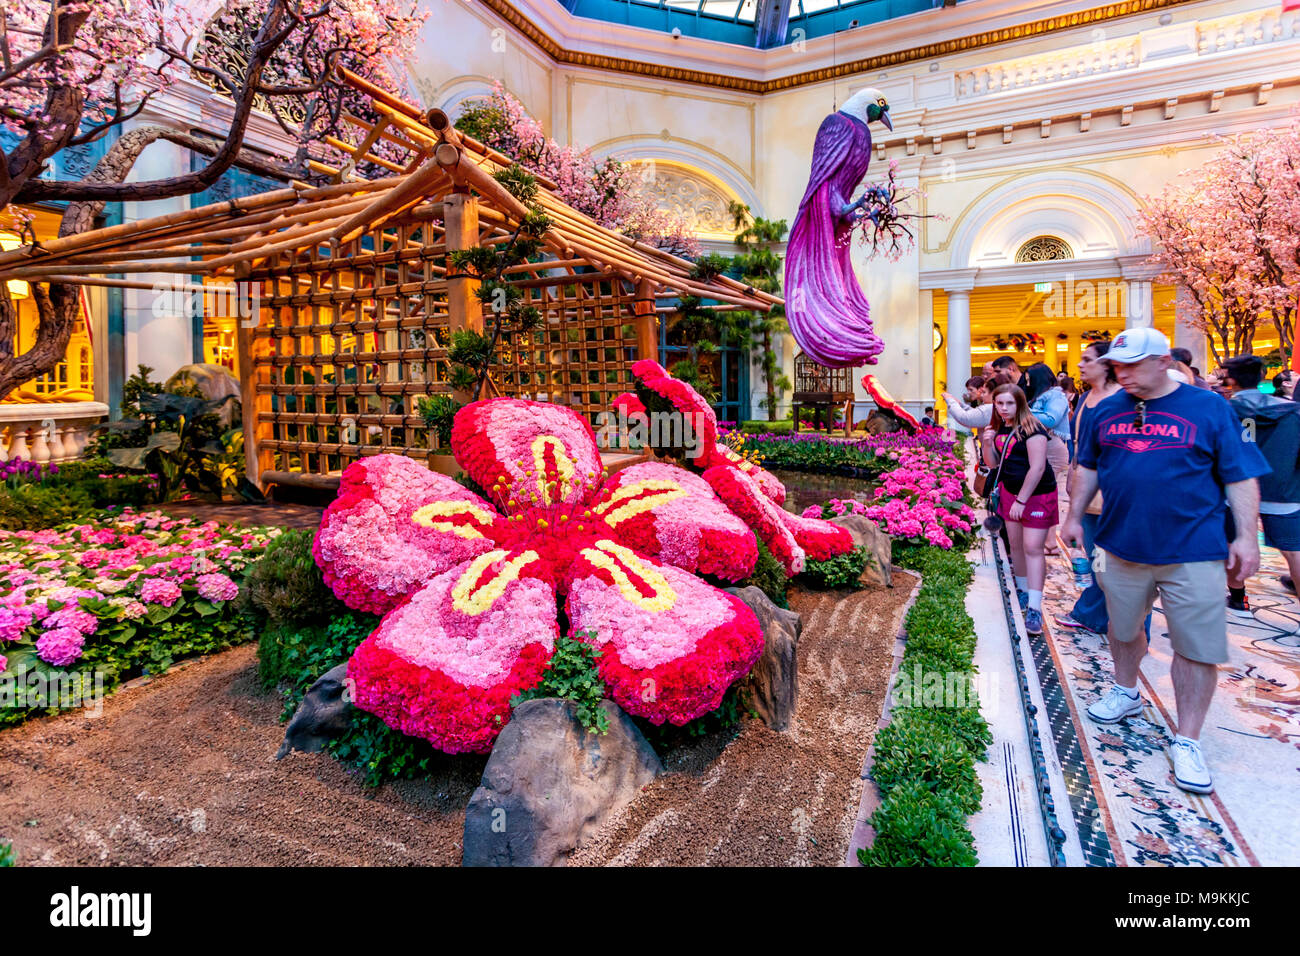 The Japenese spring display at The Bellagio, Las Vegas, Navarda, U.S.A. Stock Photo